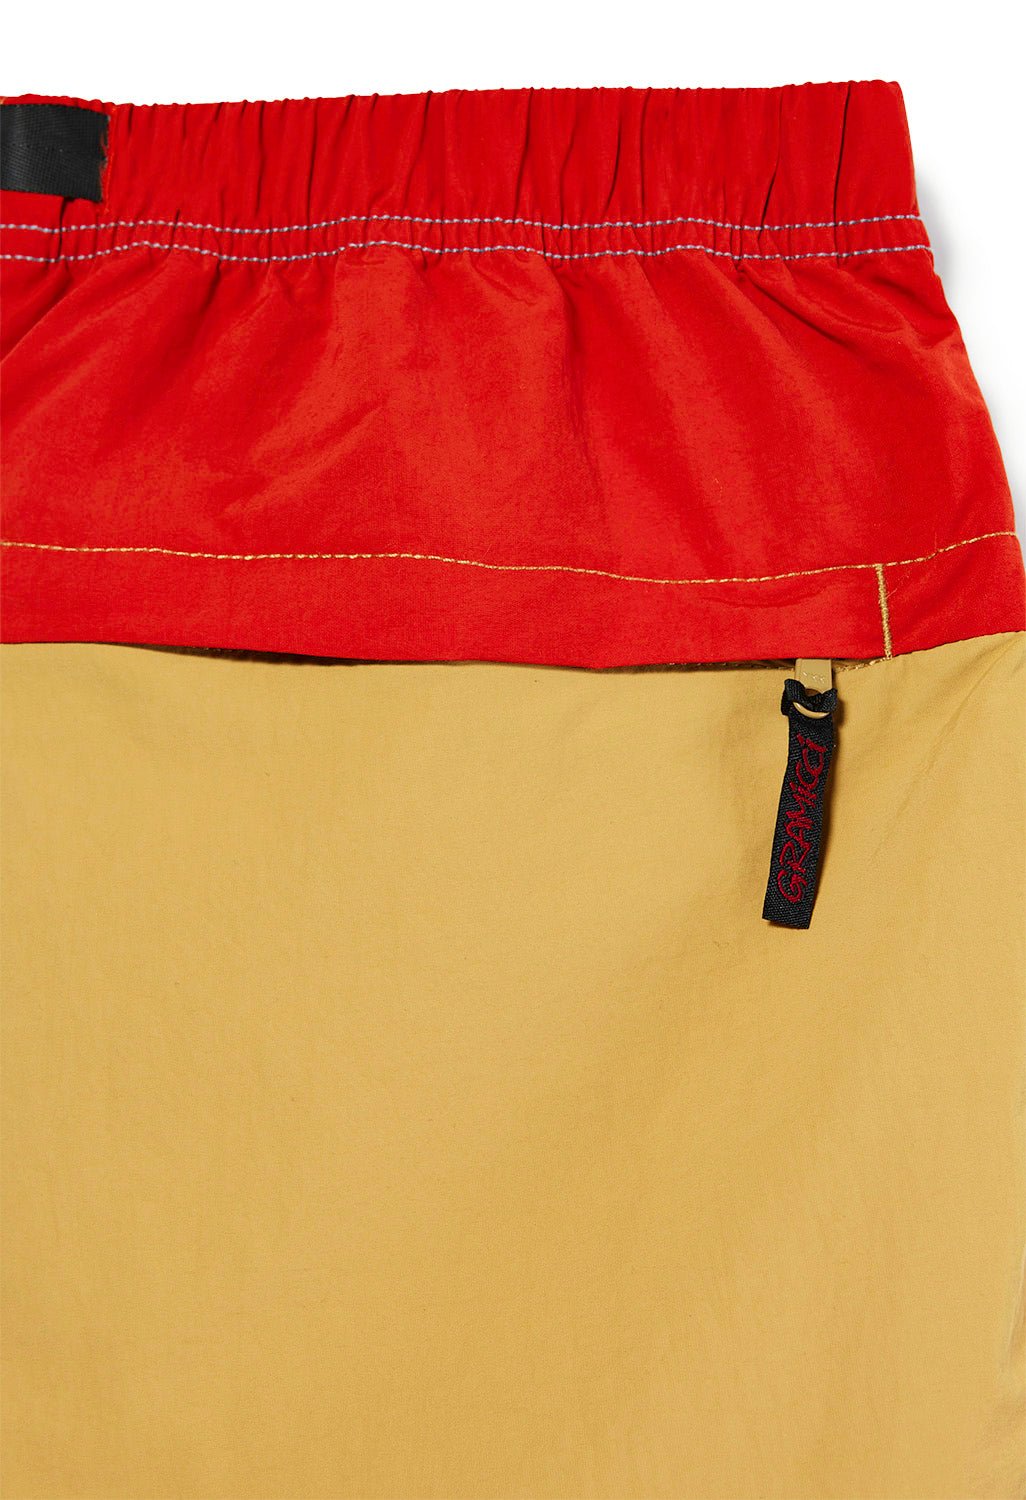 Gramicci Men's Shell Packable Shorts - Sax/Mustard